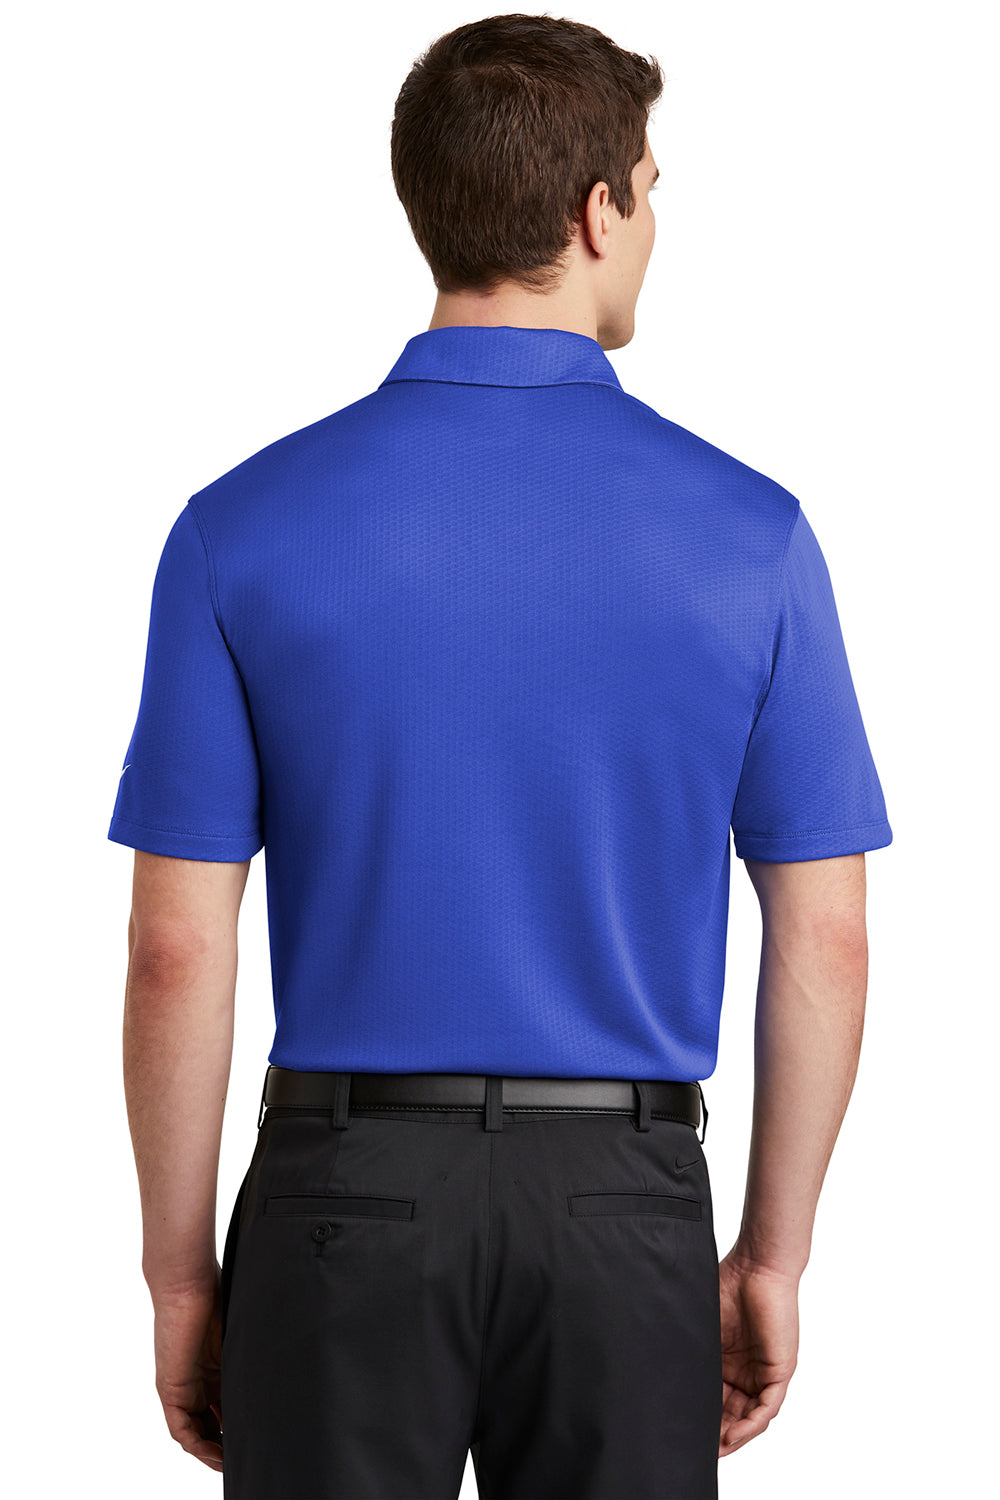 Nike NKAH6266 Mens Dri-Fit Moisture Wicking Short Sleeve Polo Shirt Game Royal Blue Model Back